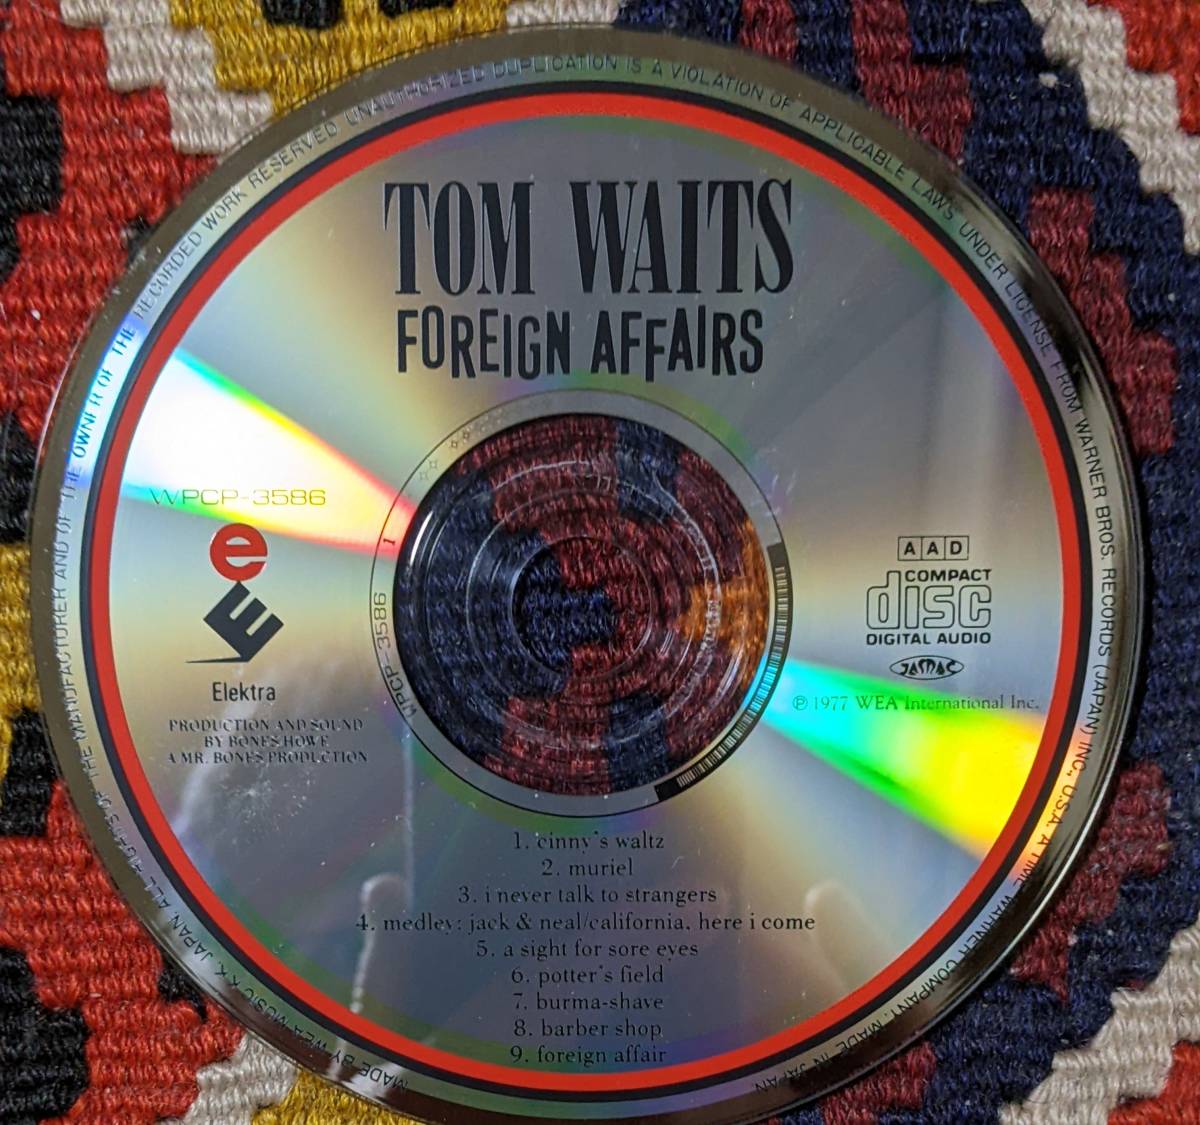 70's トム・ウェイツ Tom Waits (CD)/異国の出来事 Foreign Affairs Elektra WPCP-3586 1977年_画像10